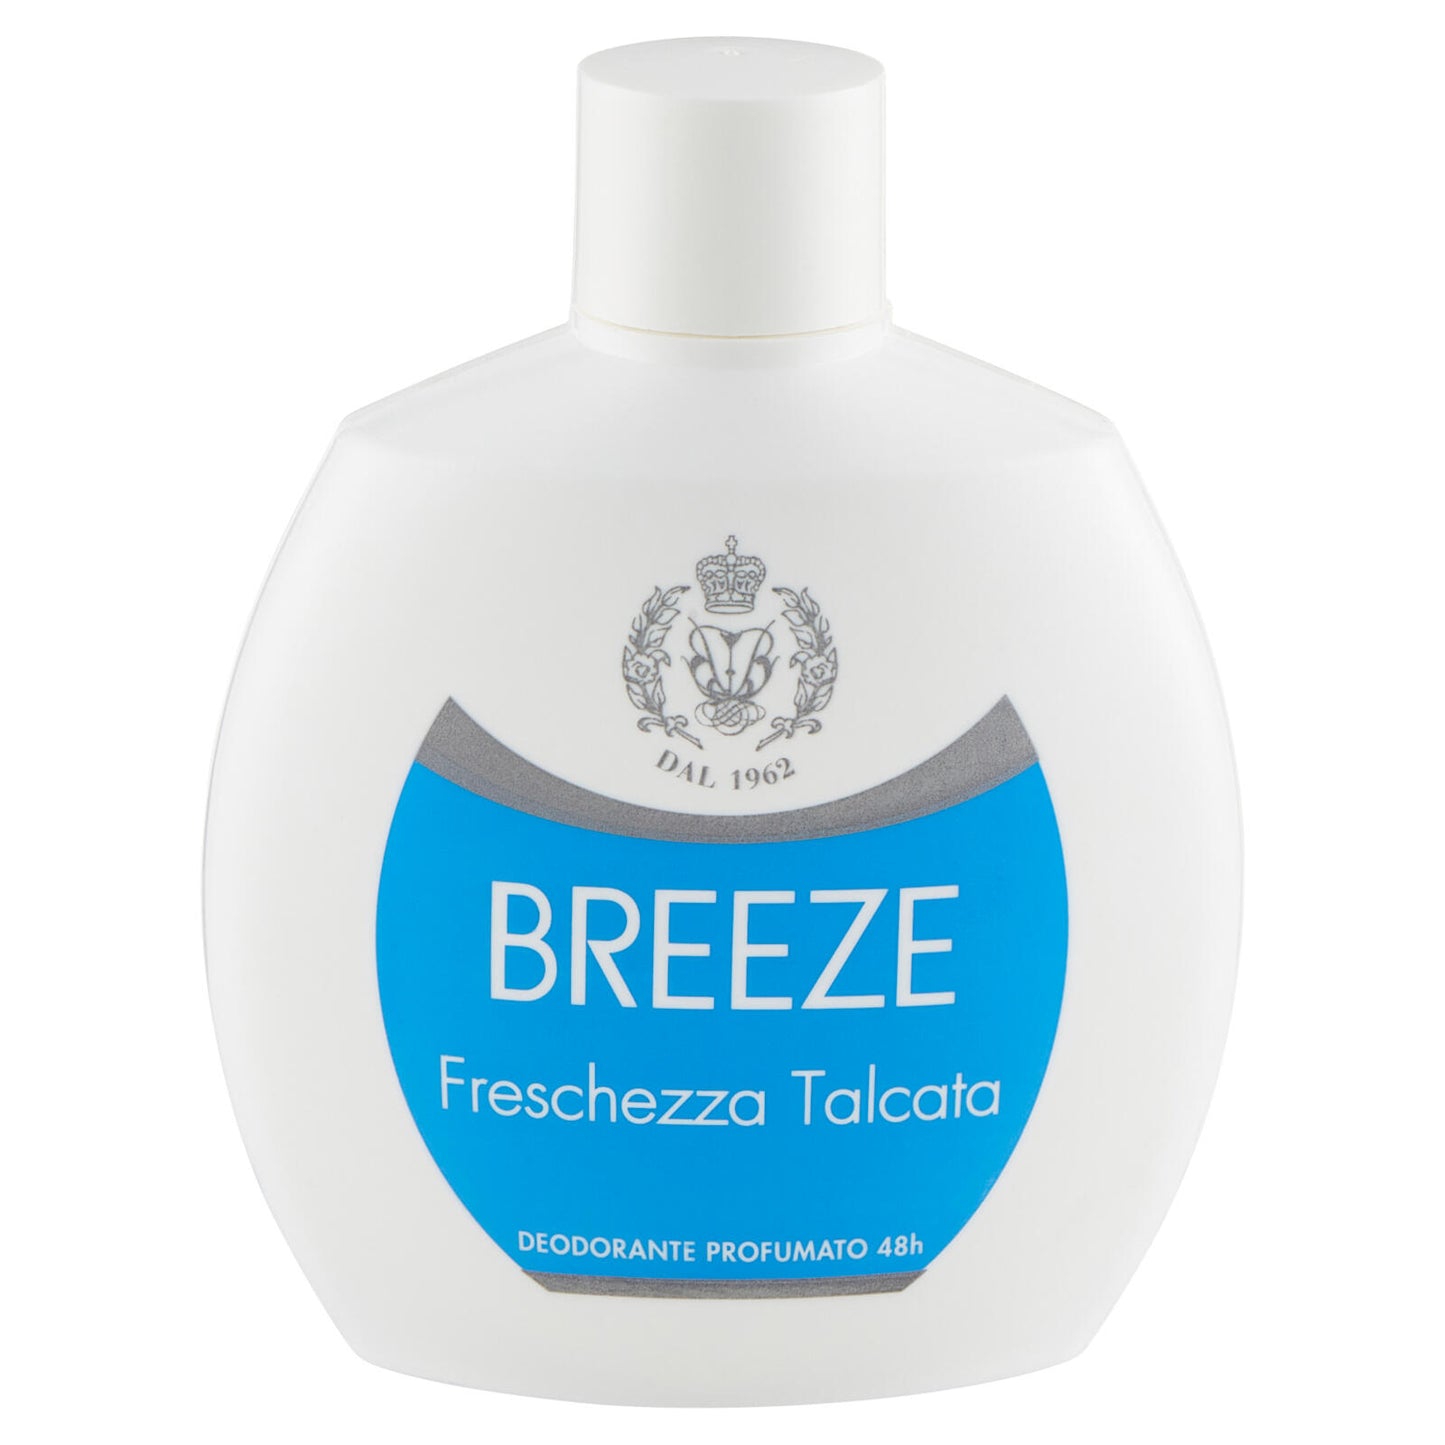 Breeze Freschezza Talcata Deodorante Profumato 48h 100 mL